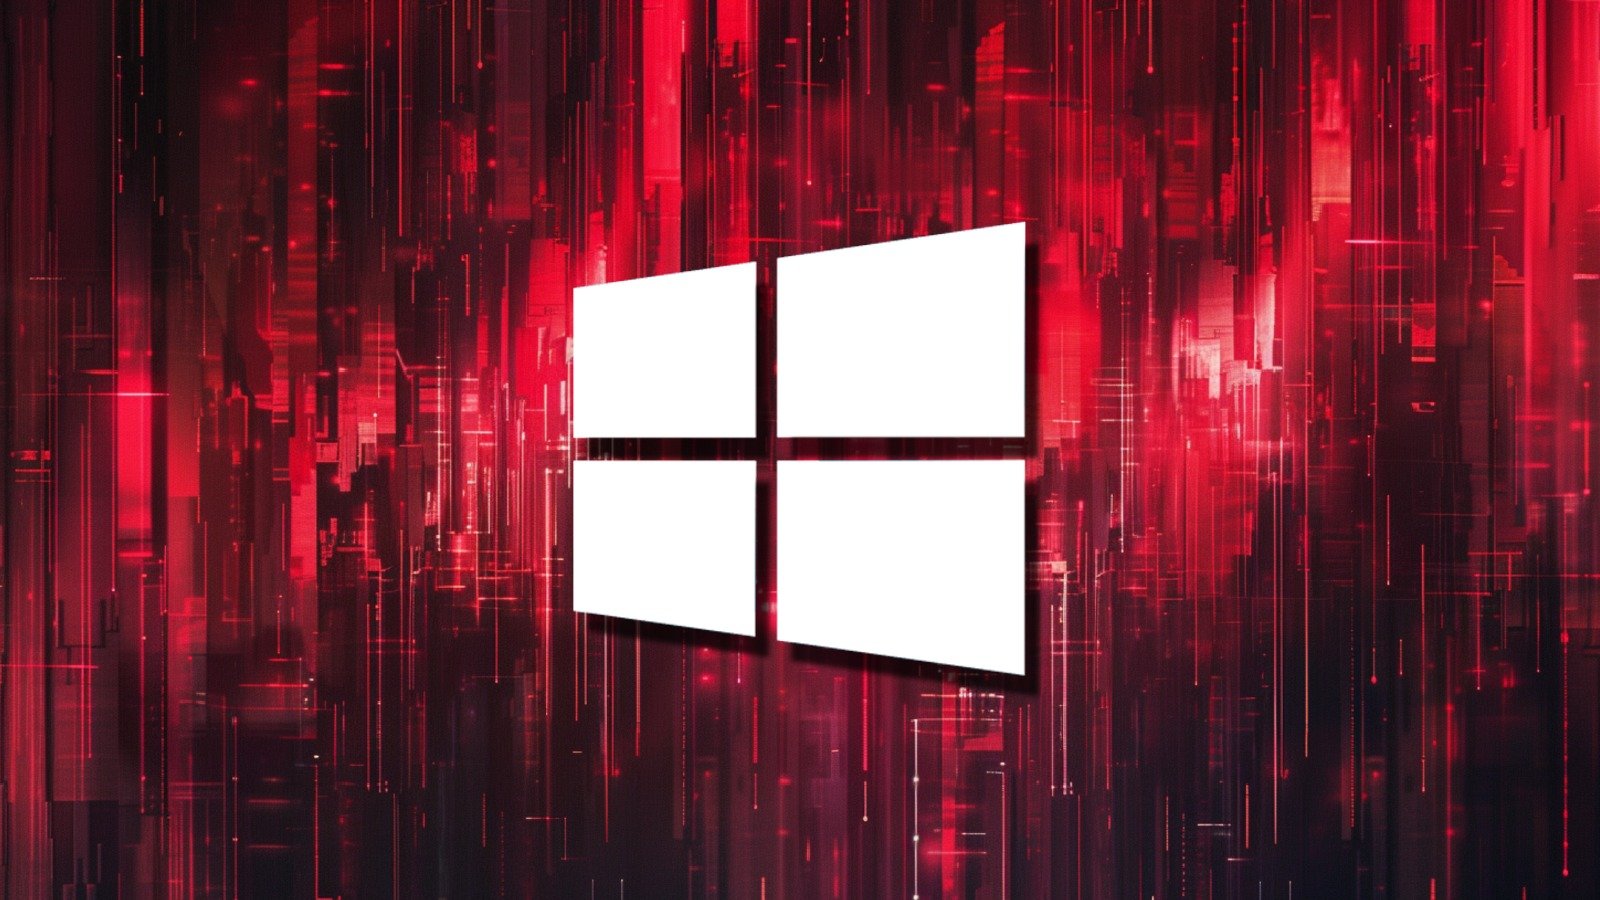 Microsoft fixes Windows zero-day exploited in QakBot malware attacks